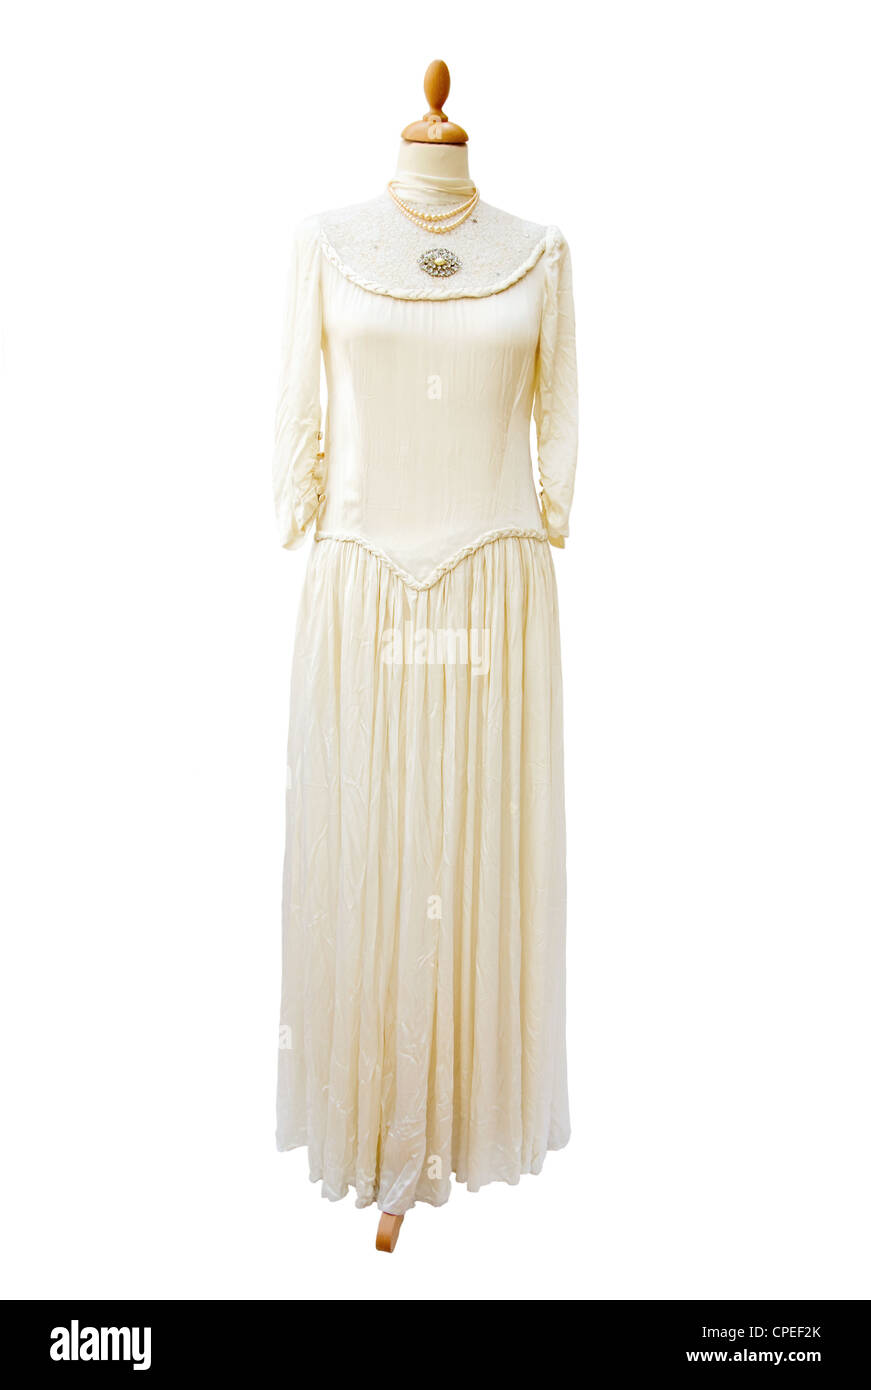 Genuine antique 1930 white satin bride dress. Full length. Isolated over white background. Stock Photo